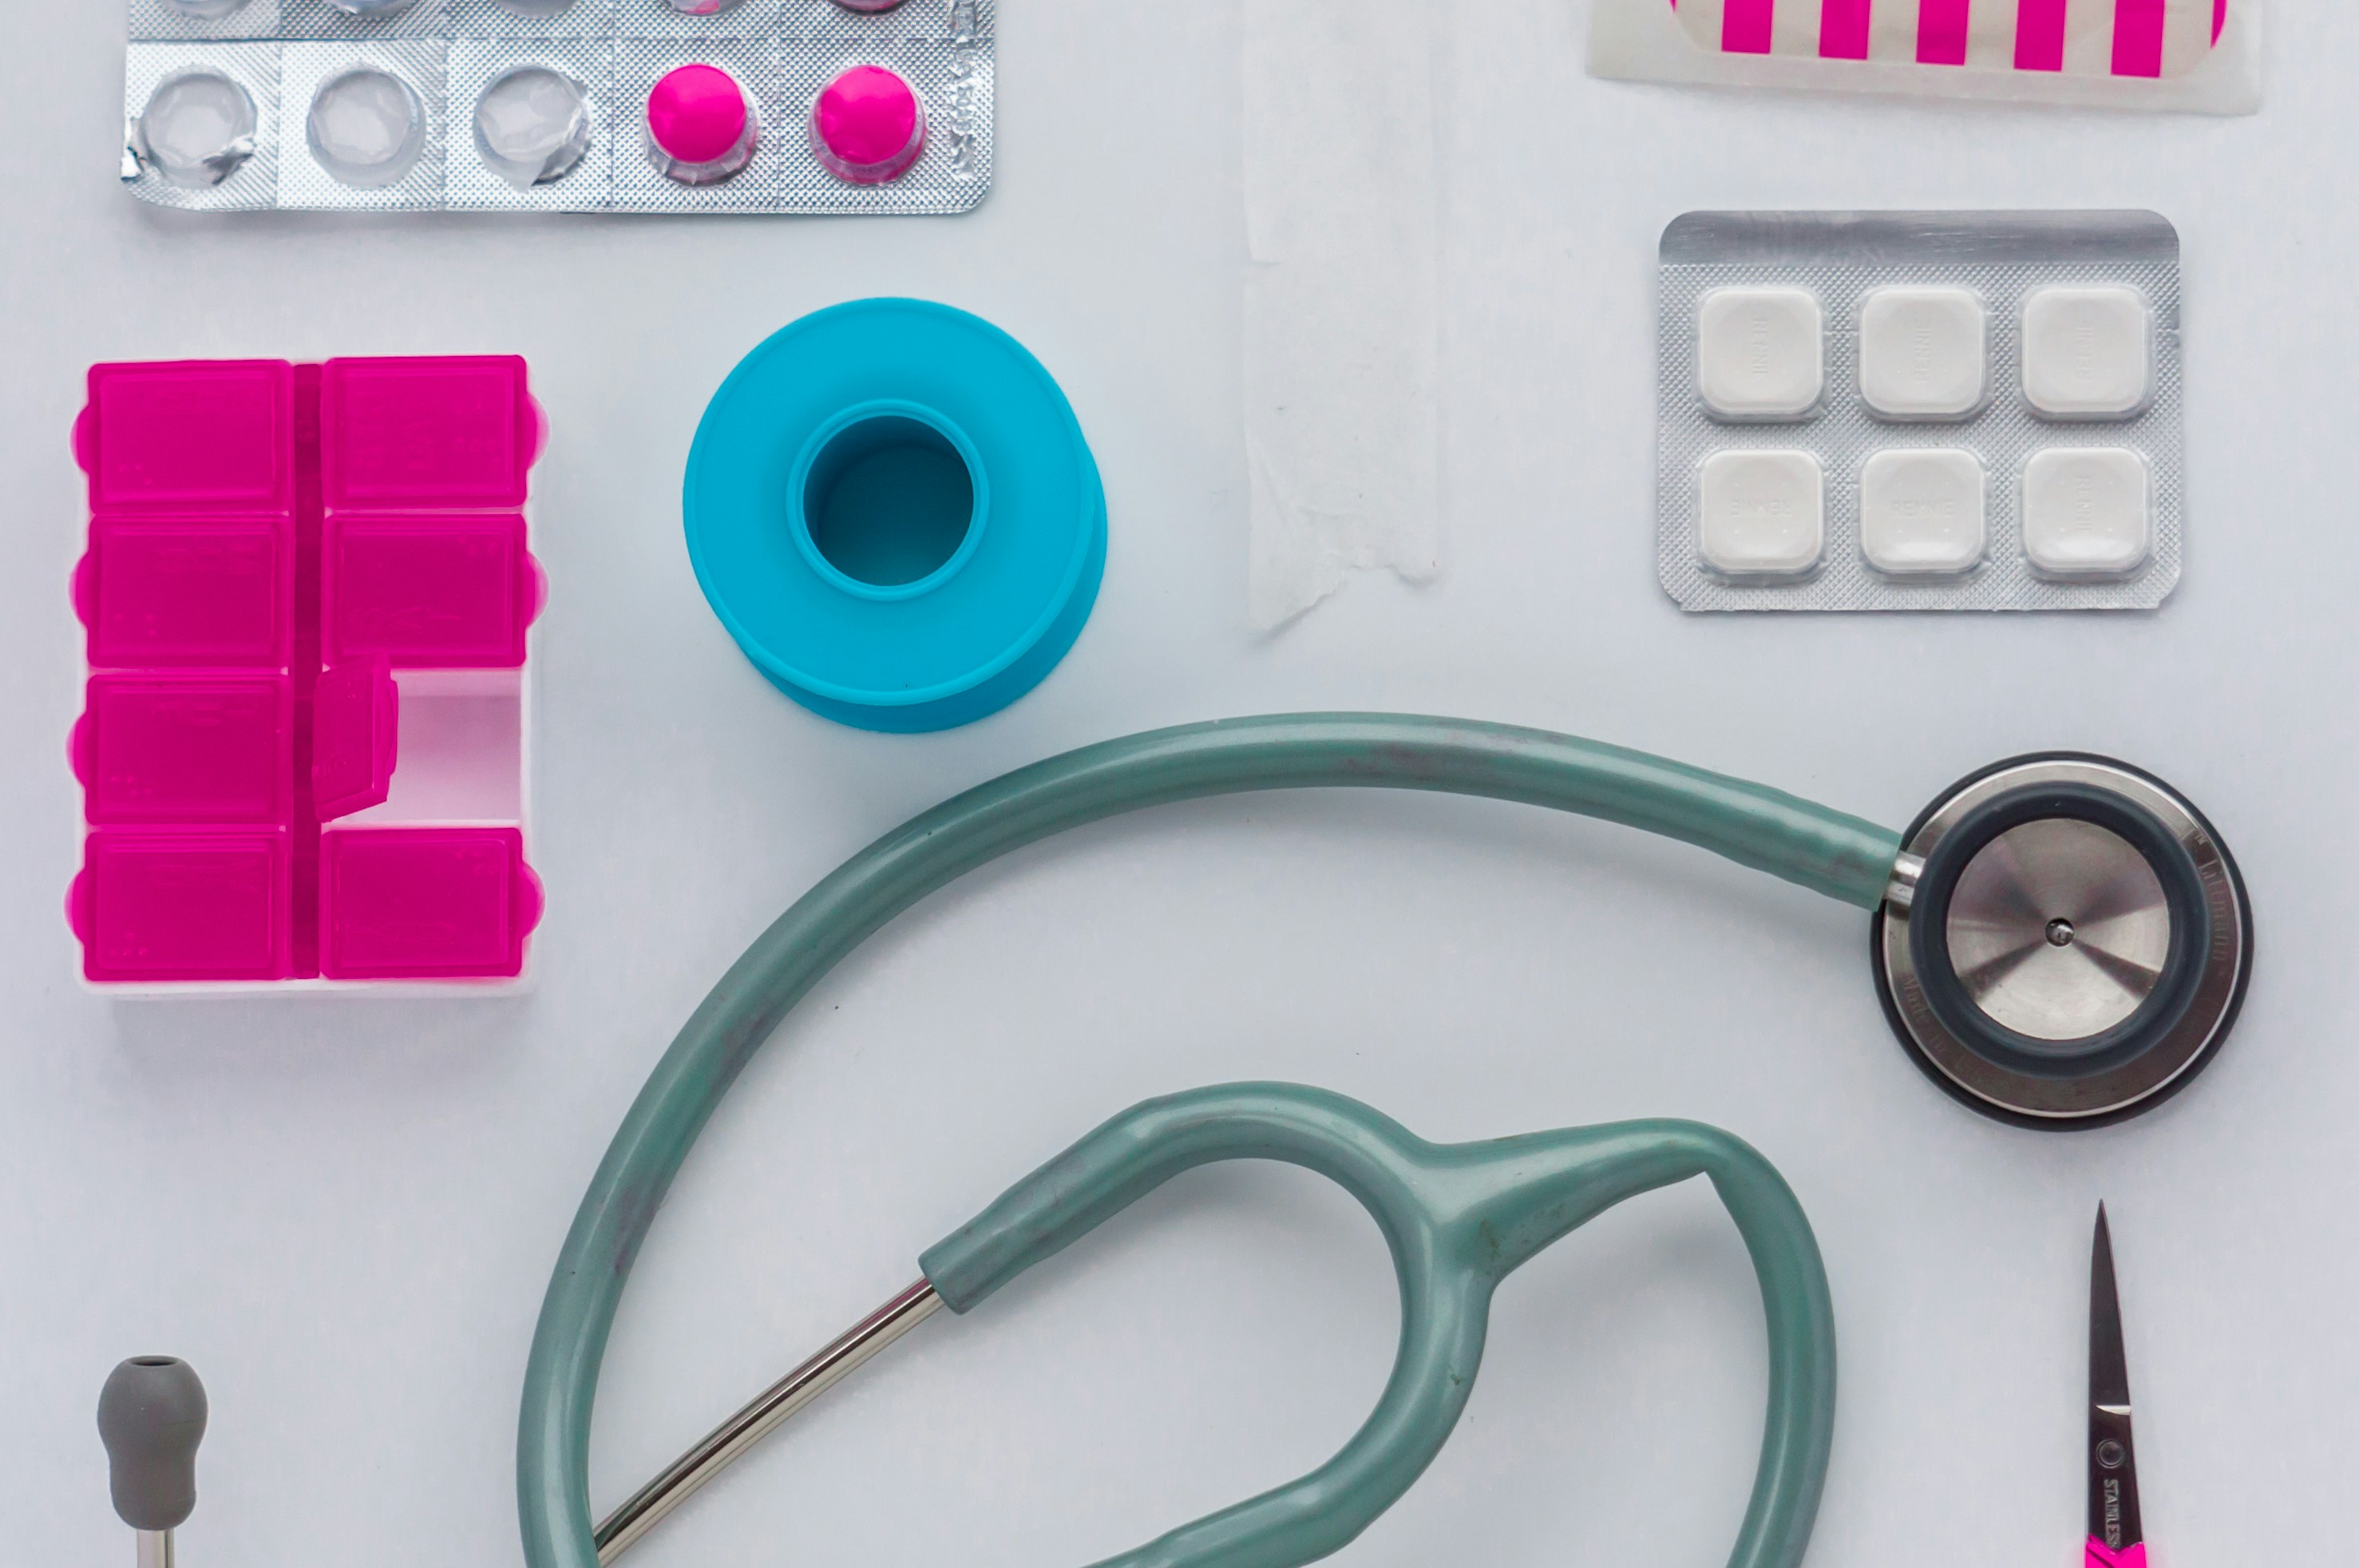 Pharmacy and doctor's attributes like stethoscope, aspirine, medicine, band-aid